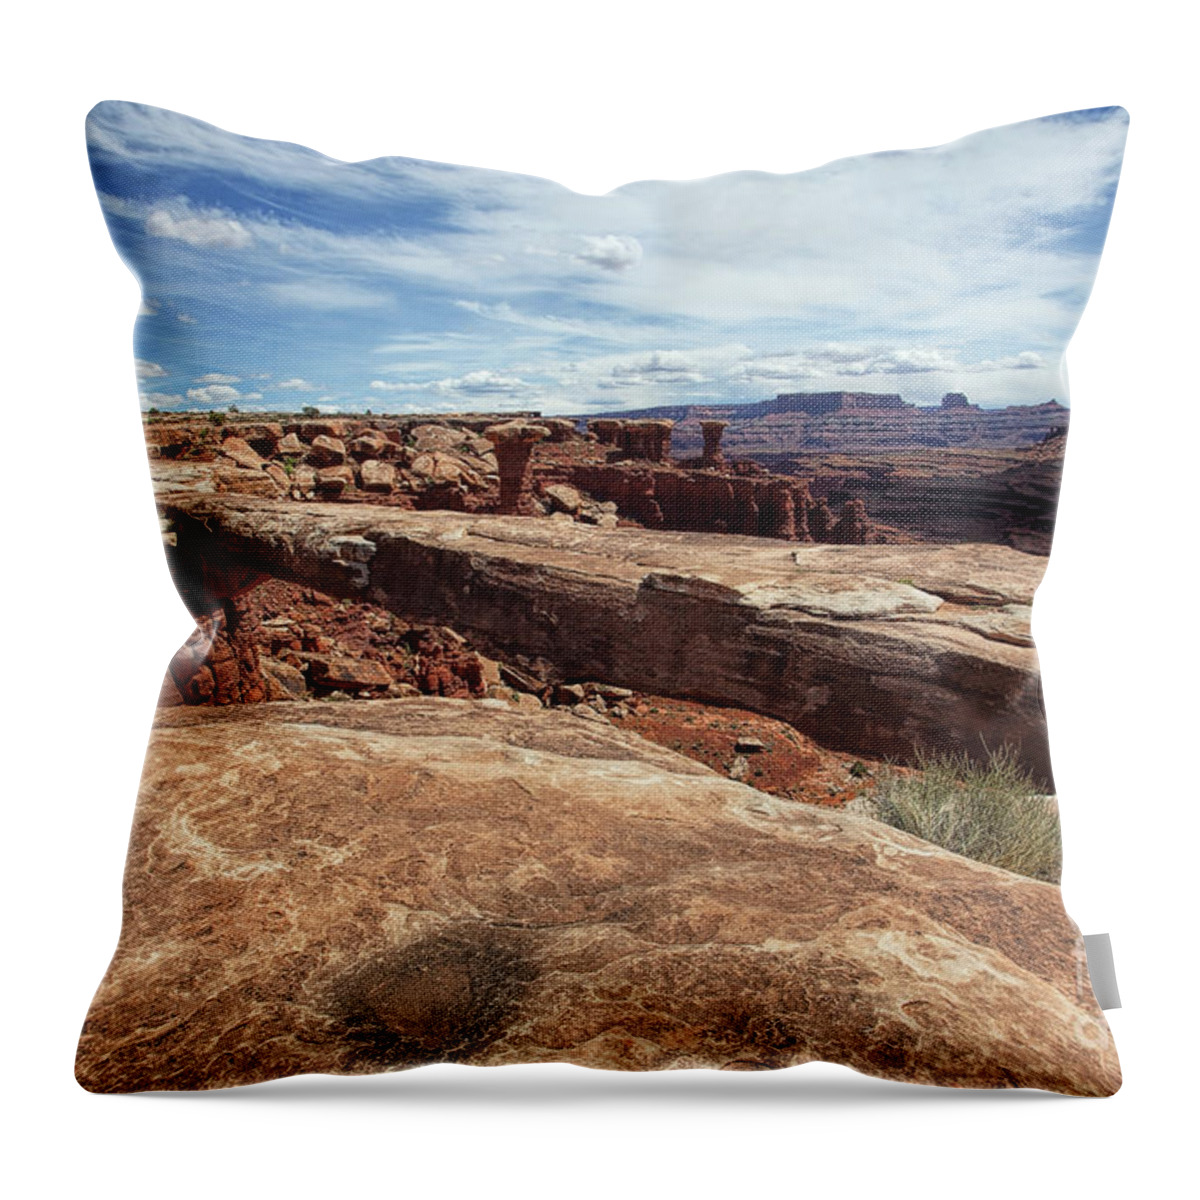 Utah Landscape Throw Pillow featuring the photograph Musselman Arch by Jim Garrison